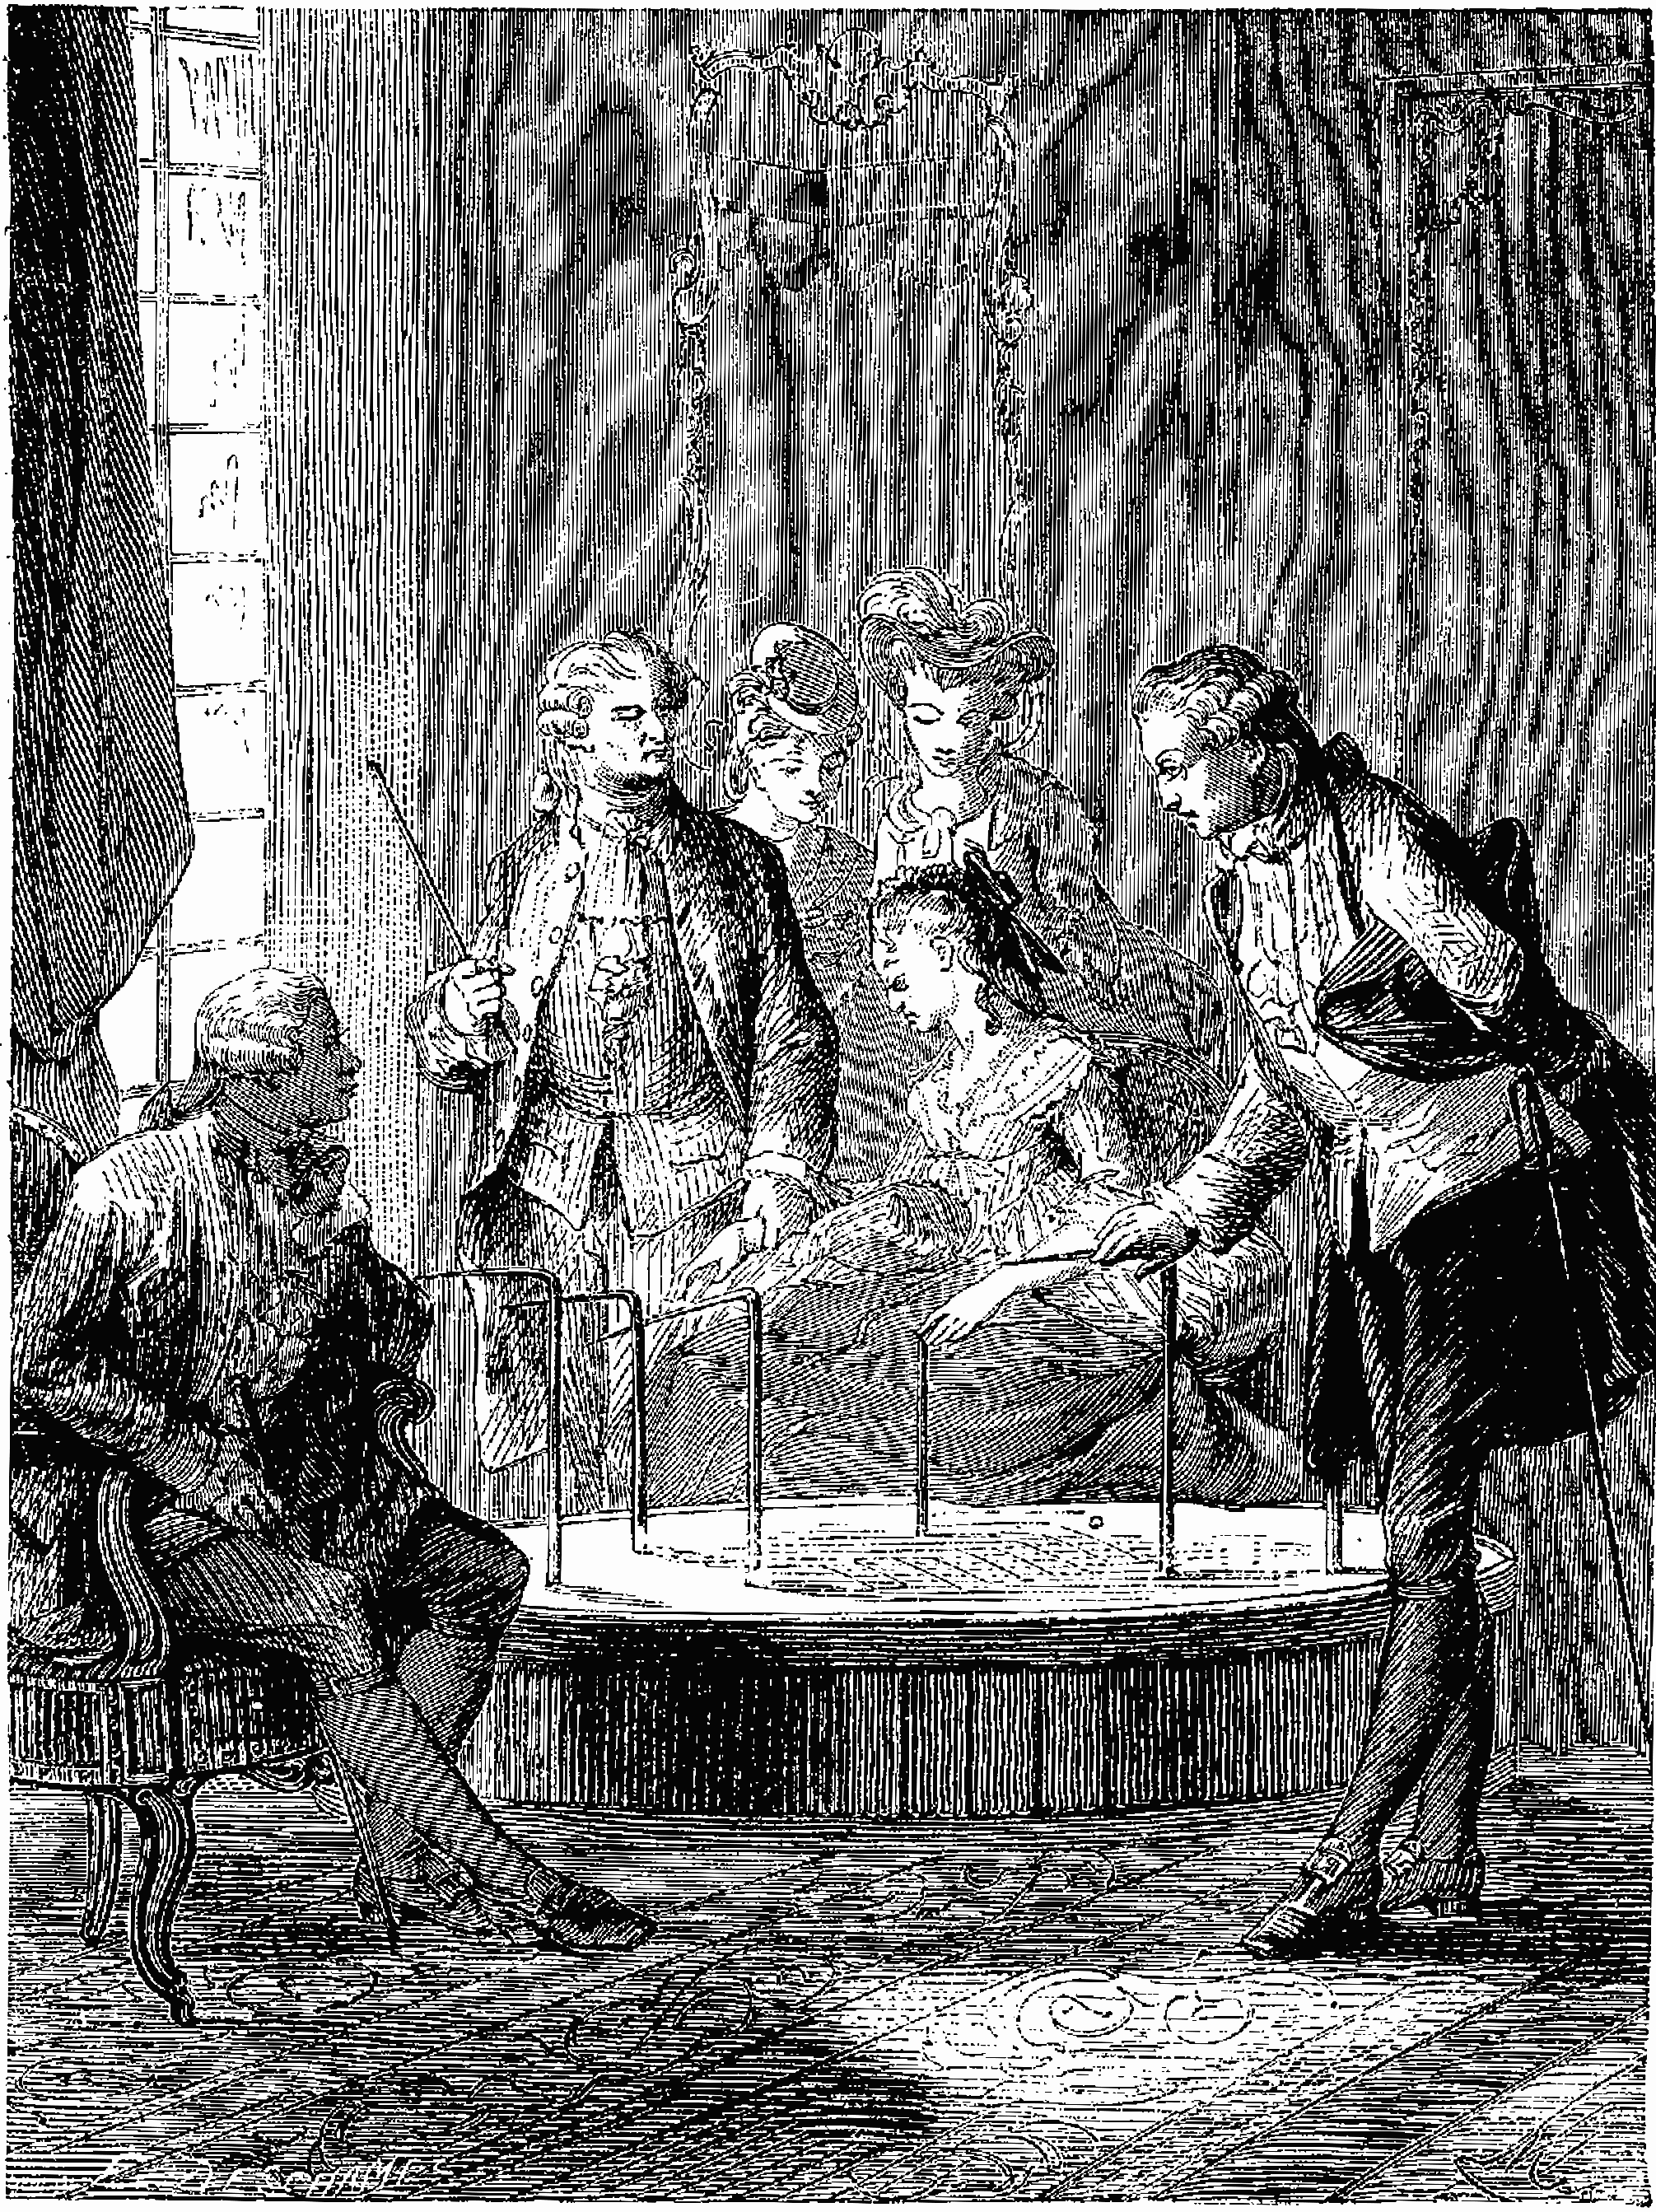 File:Vieux bouchons liège.jpg - Wikimedia Commons